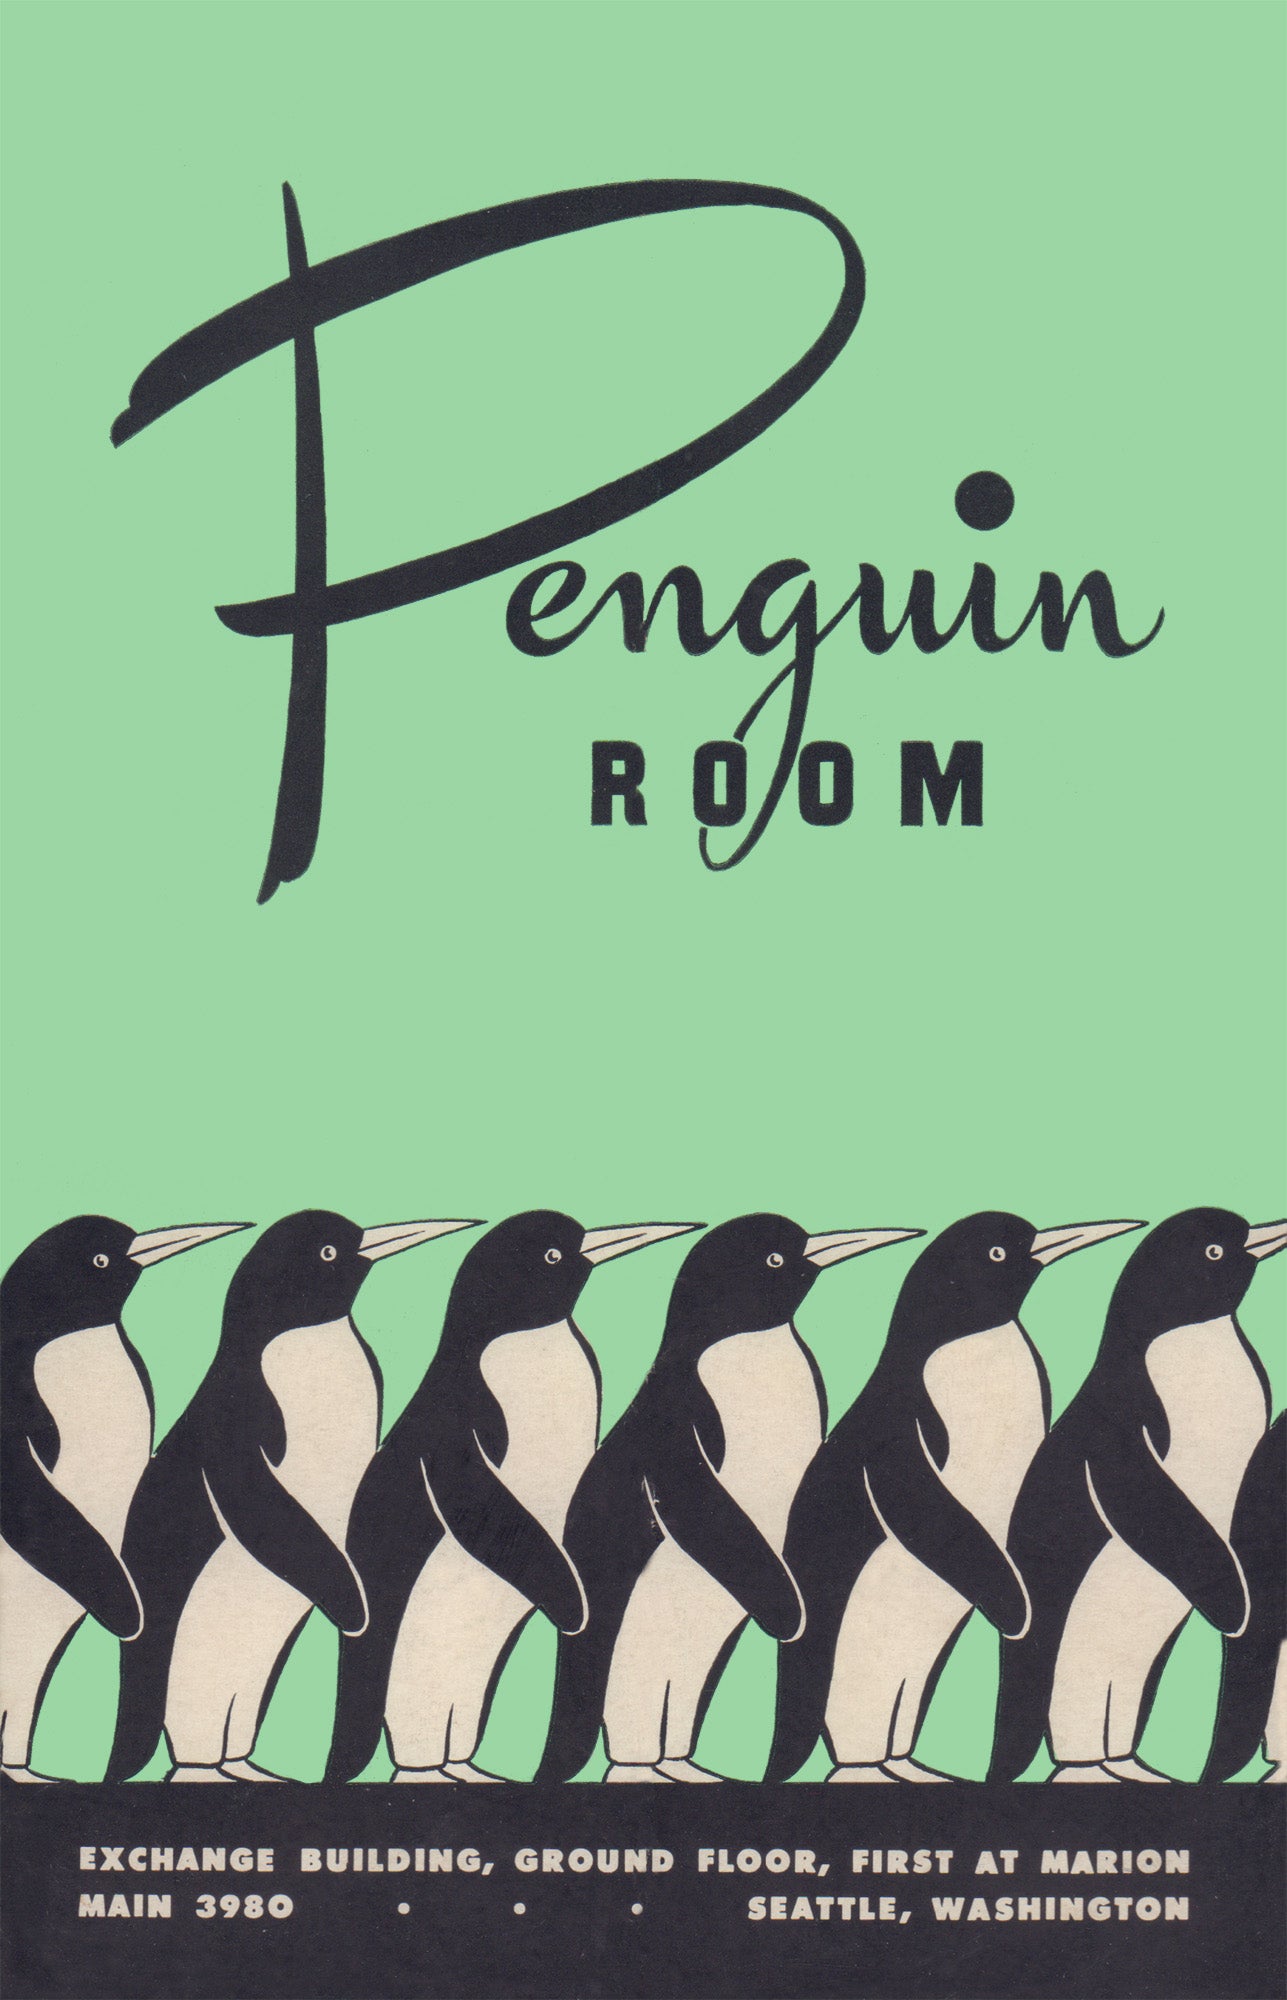 Penguin Room, Seattle 1950s Menu Art